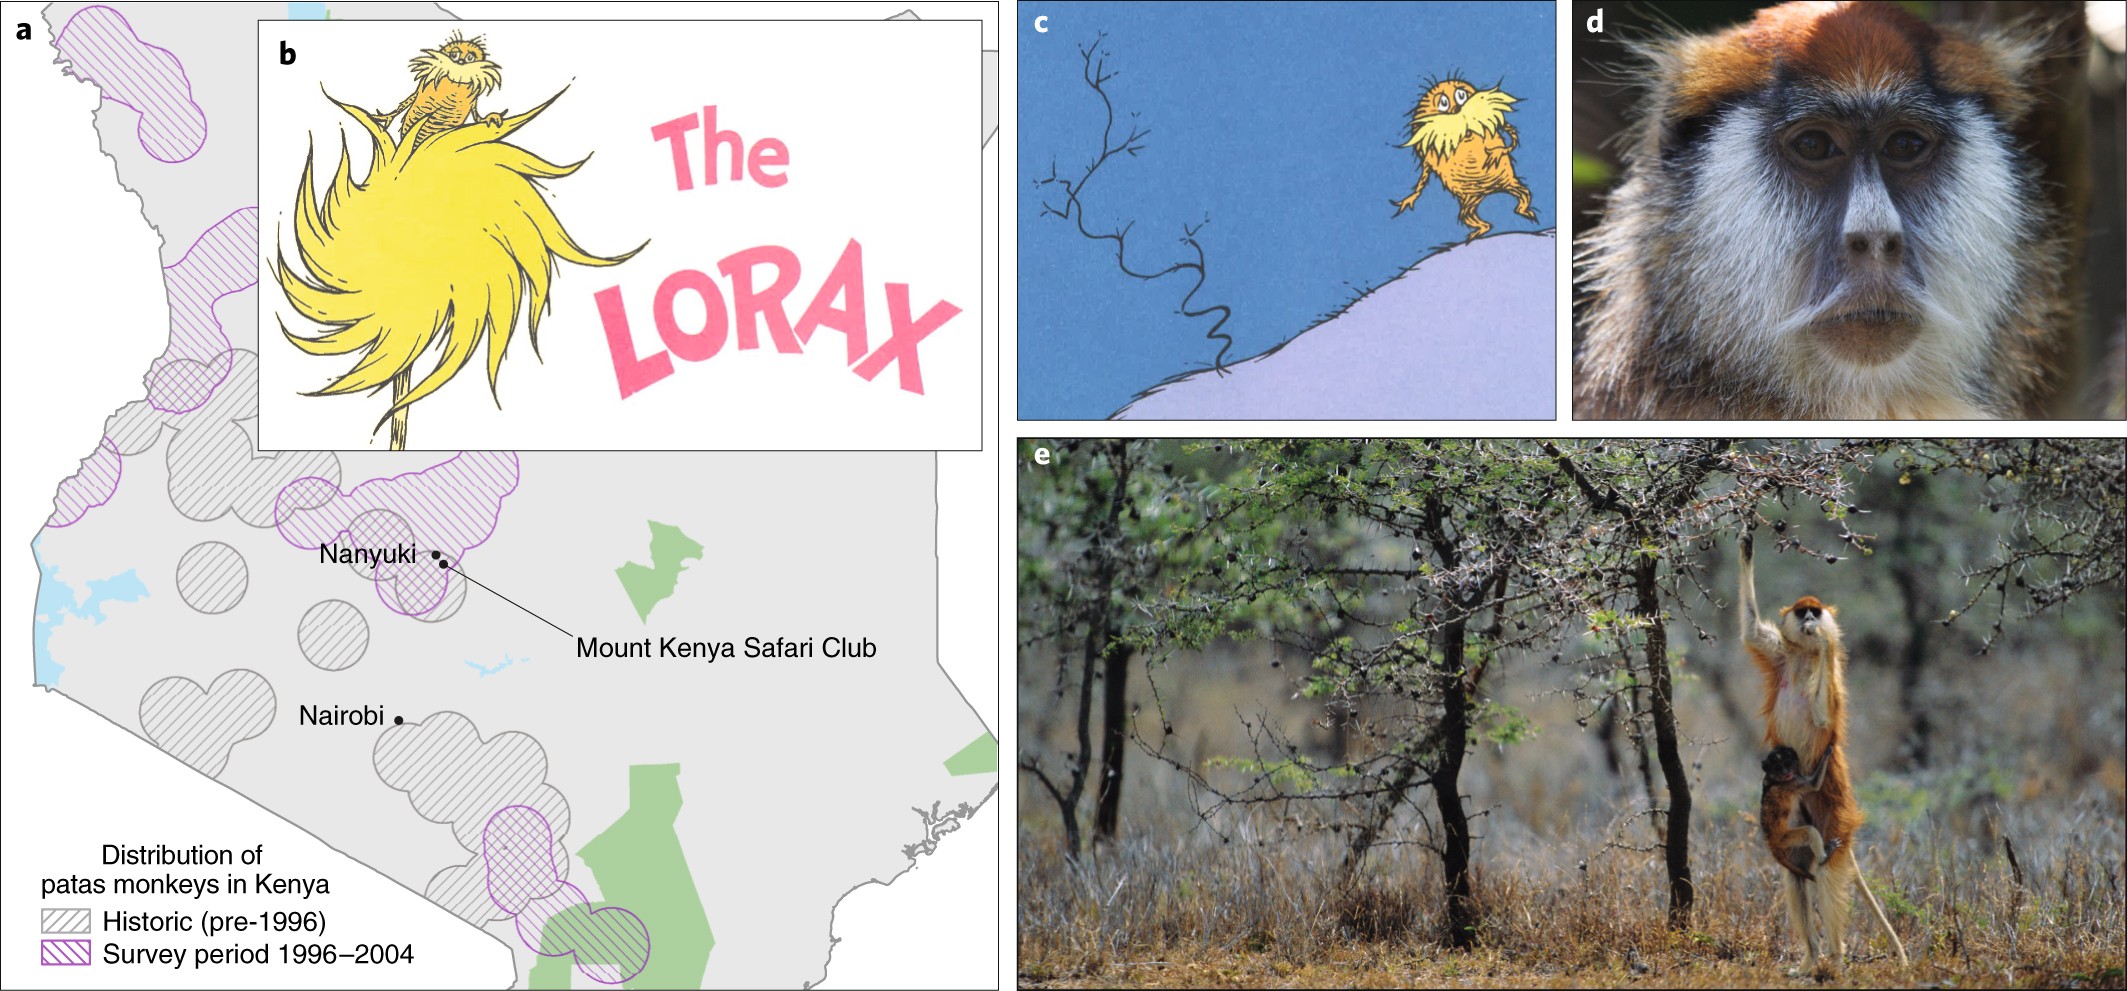 the lorax book bears